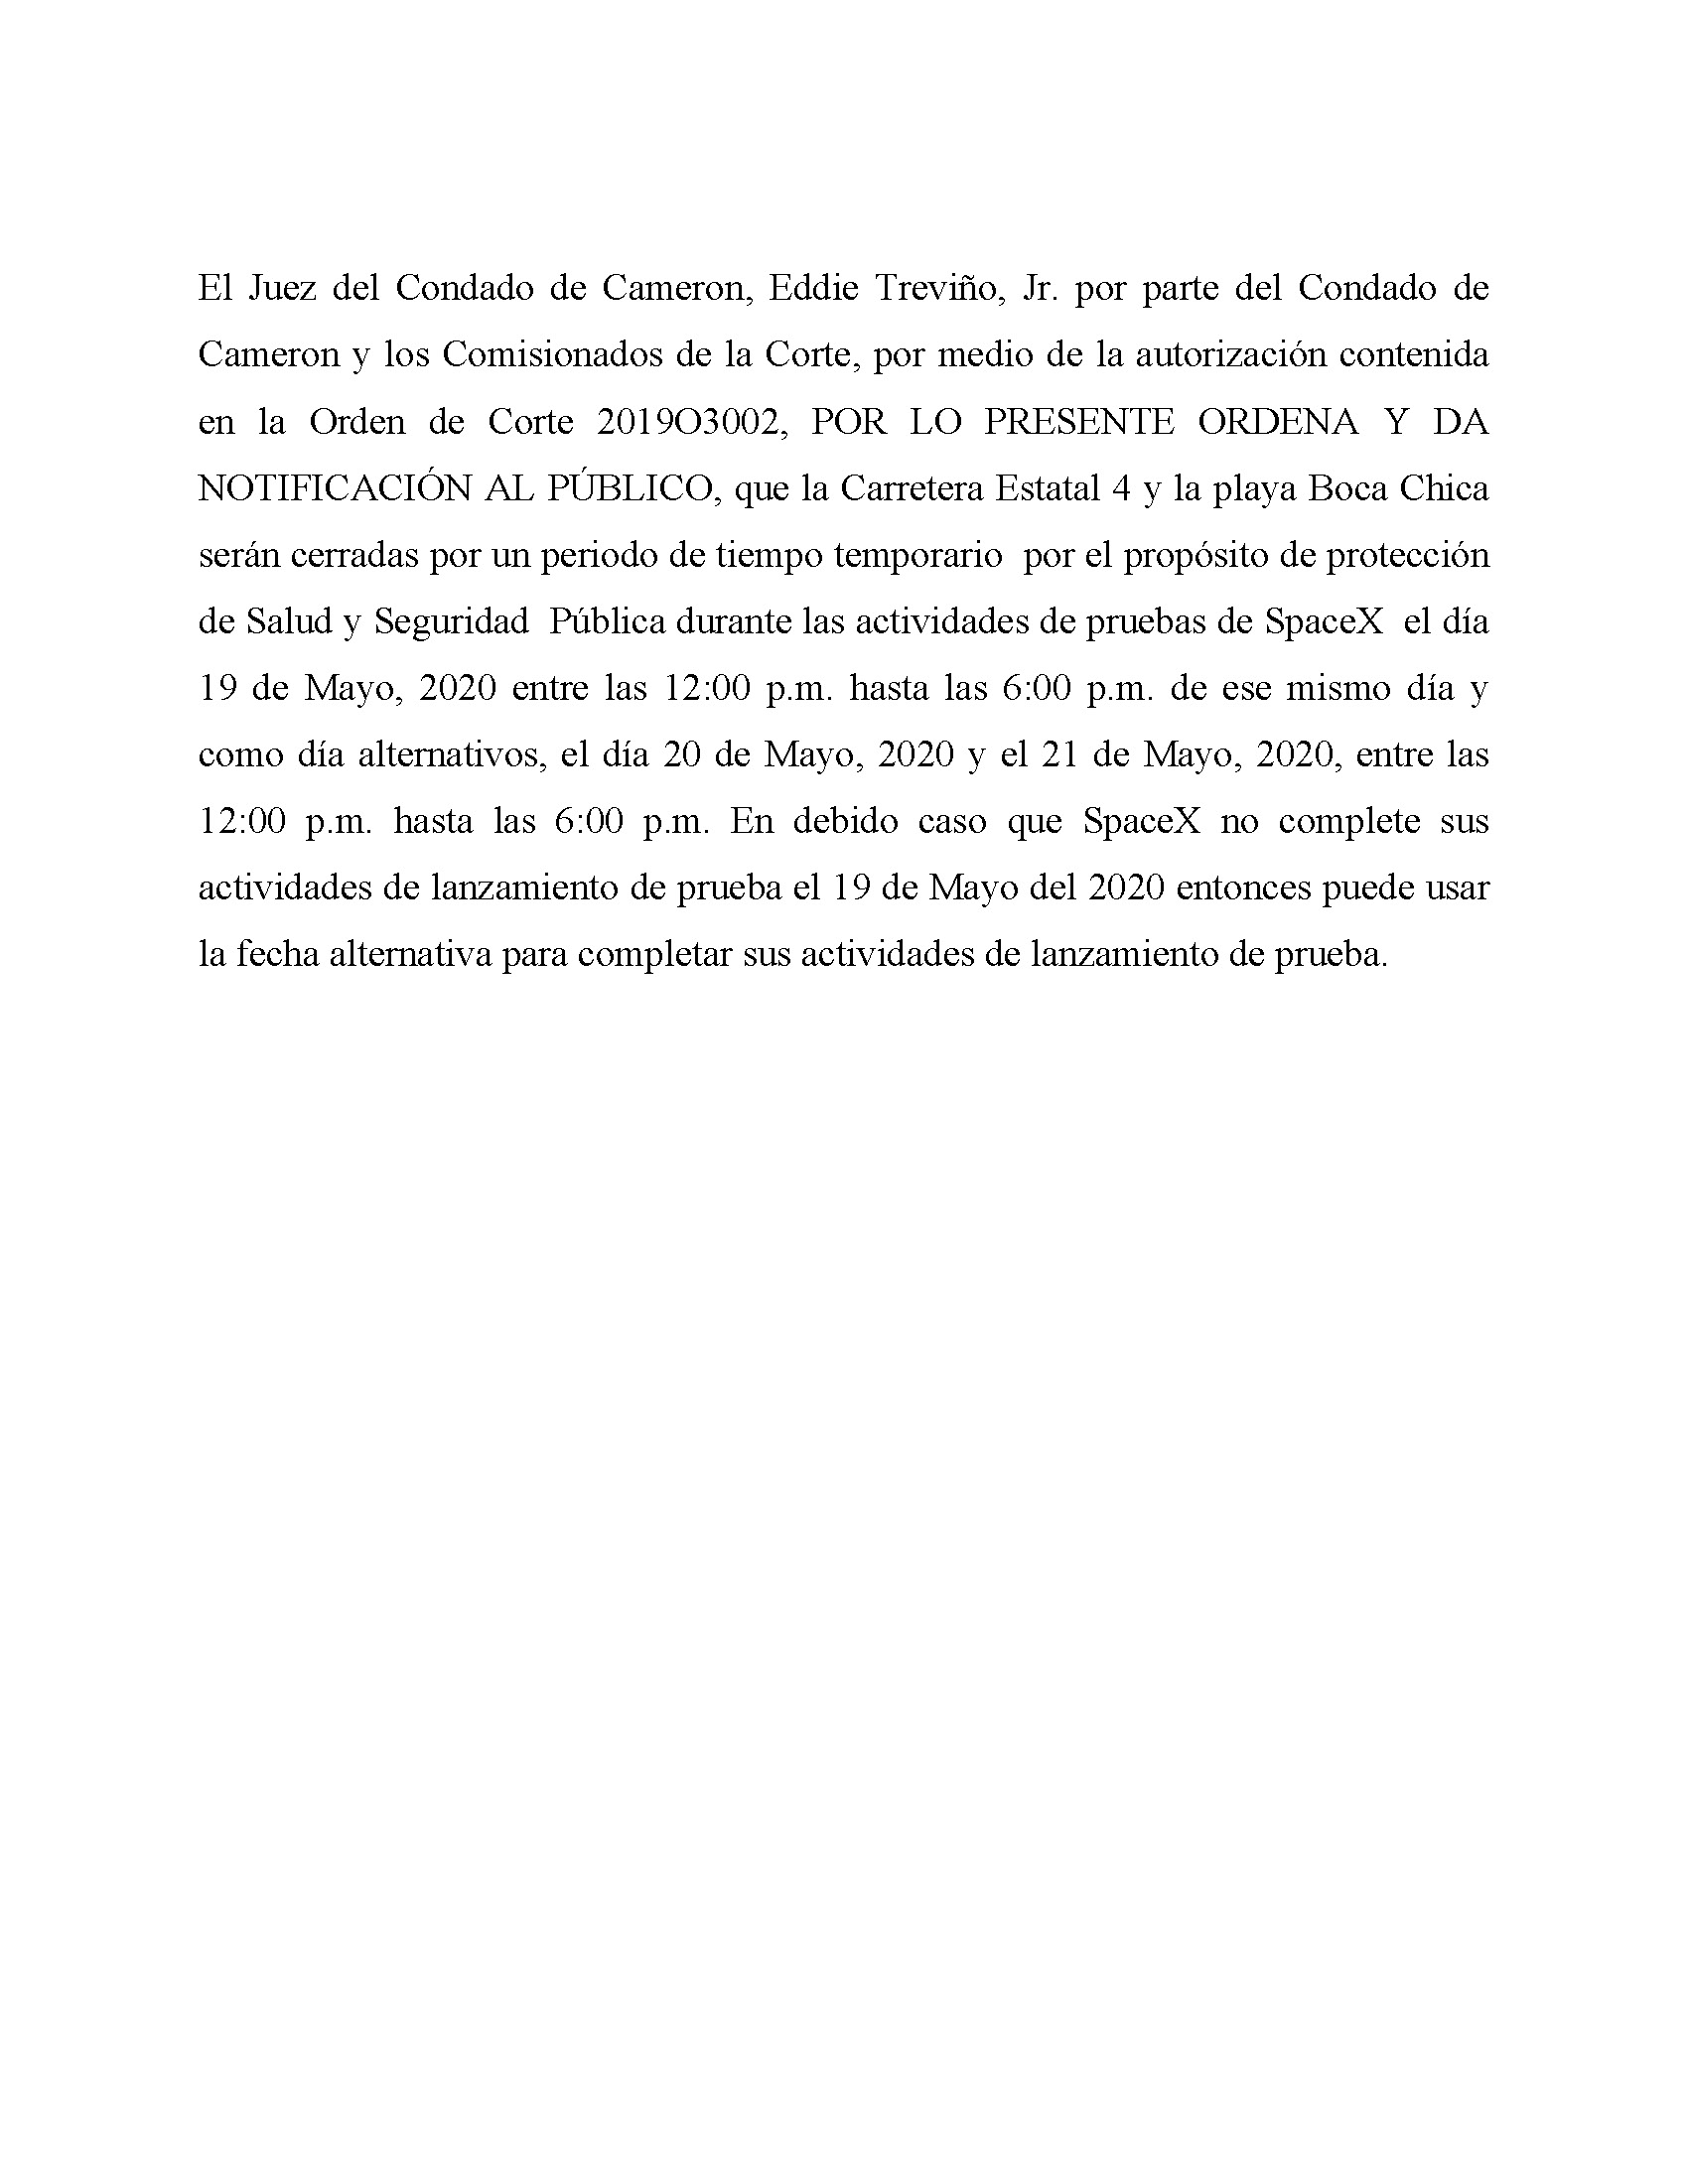 ORDER.CLOSURE OF HIGHWAY 4 Y LA PLAYA BOCA CHICA.SPANISH.05.19.20